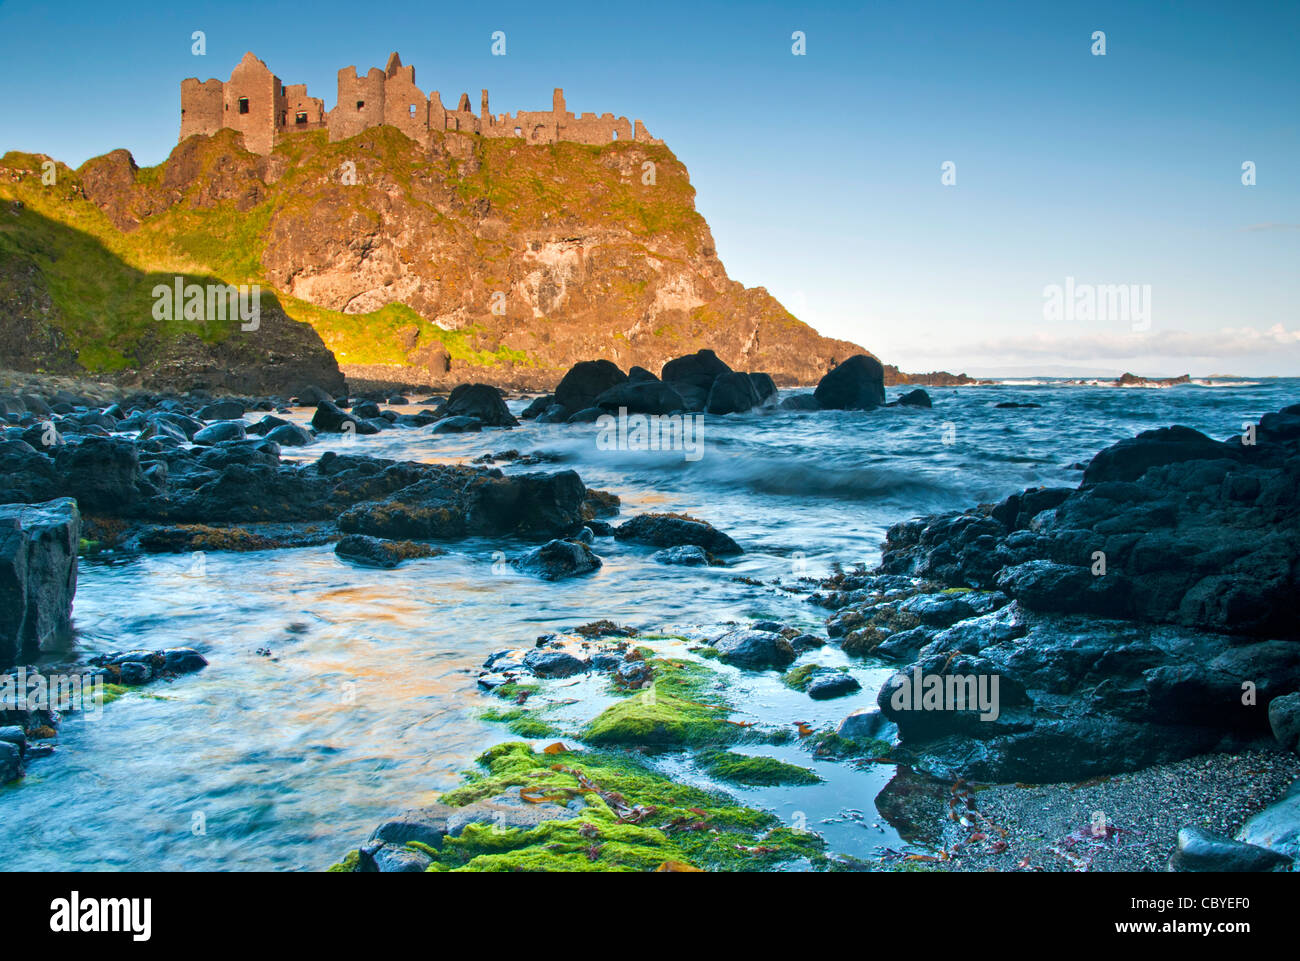 Dunluce Castle, County Antrim, Northern Ireland, UK Stock Photo